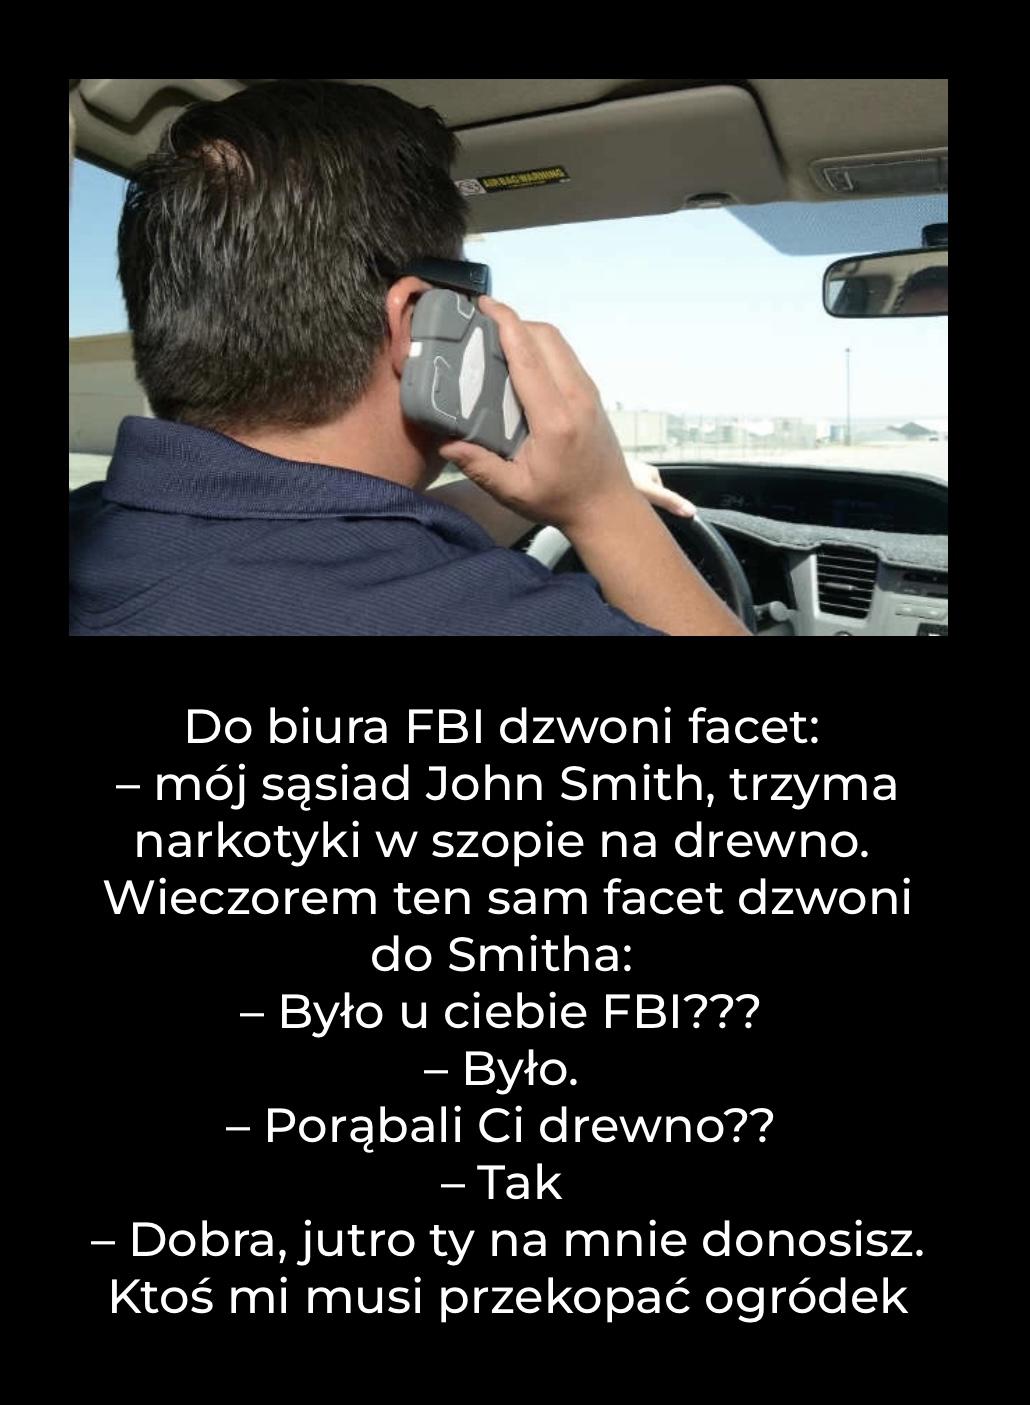 Do FBI dzwoni facet